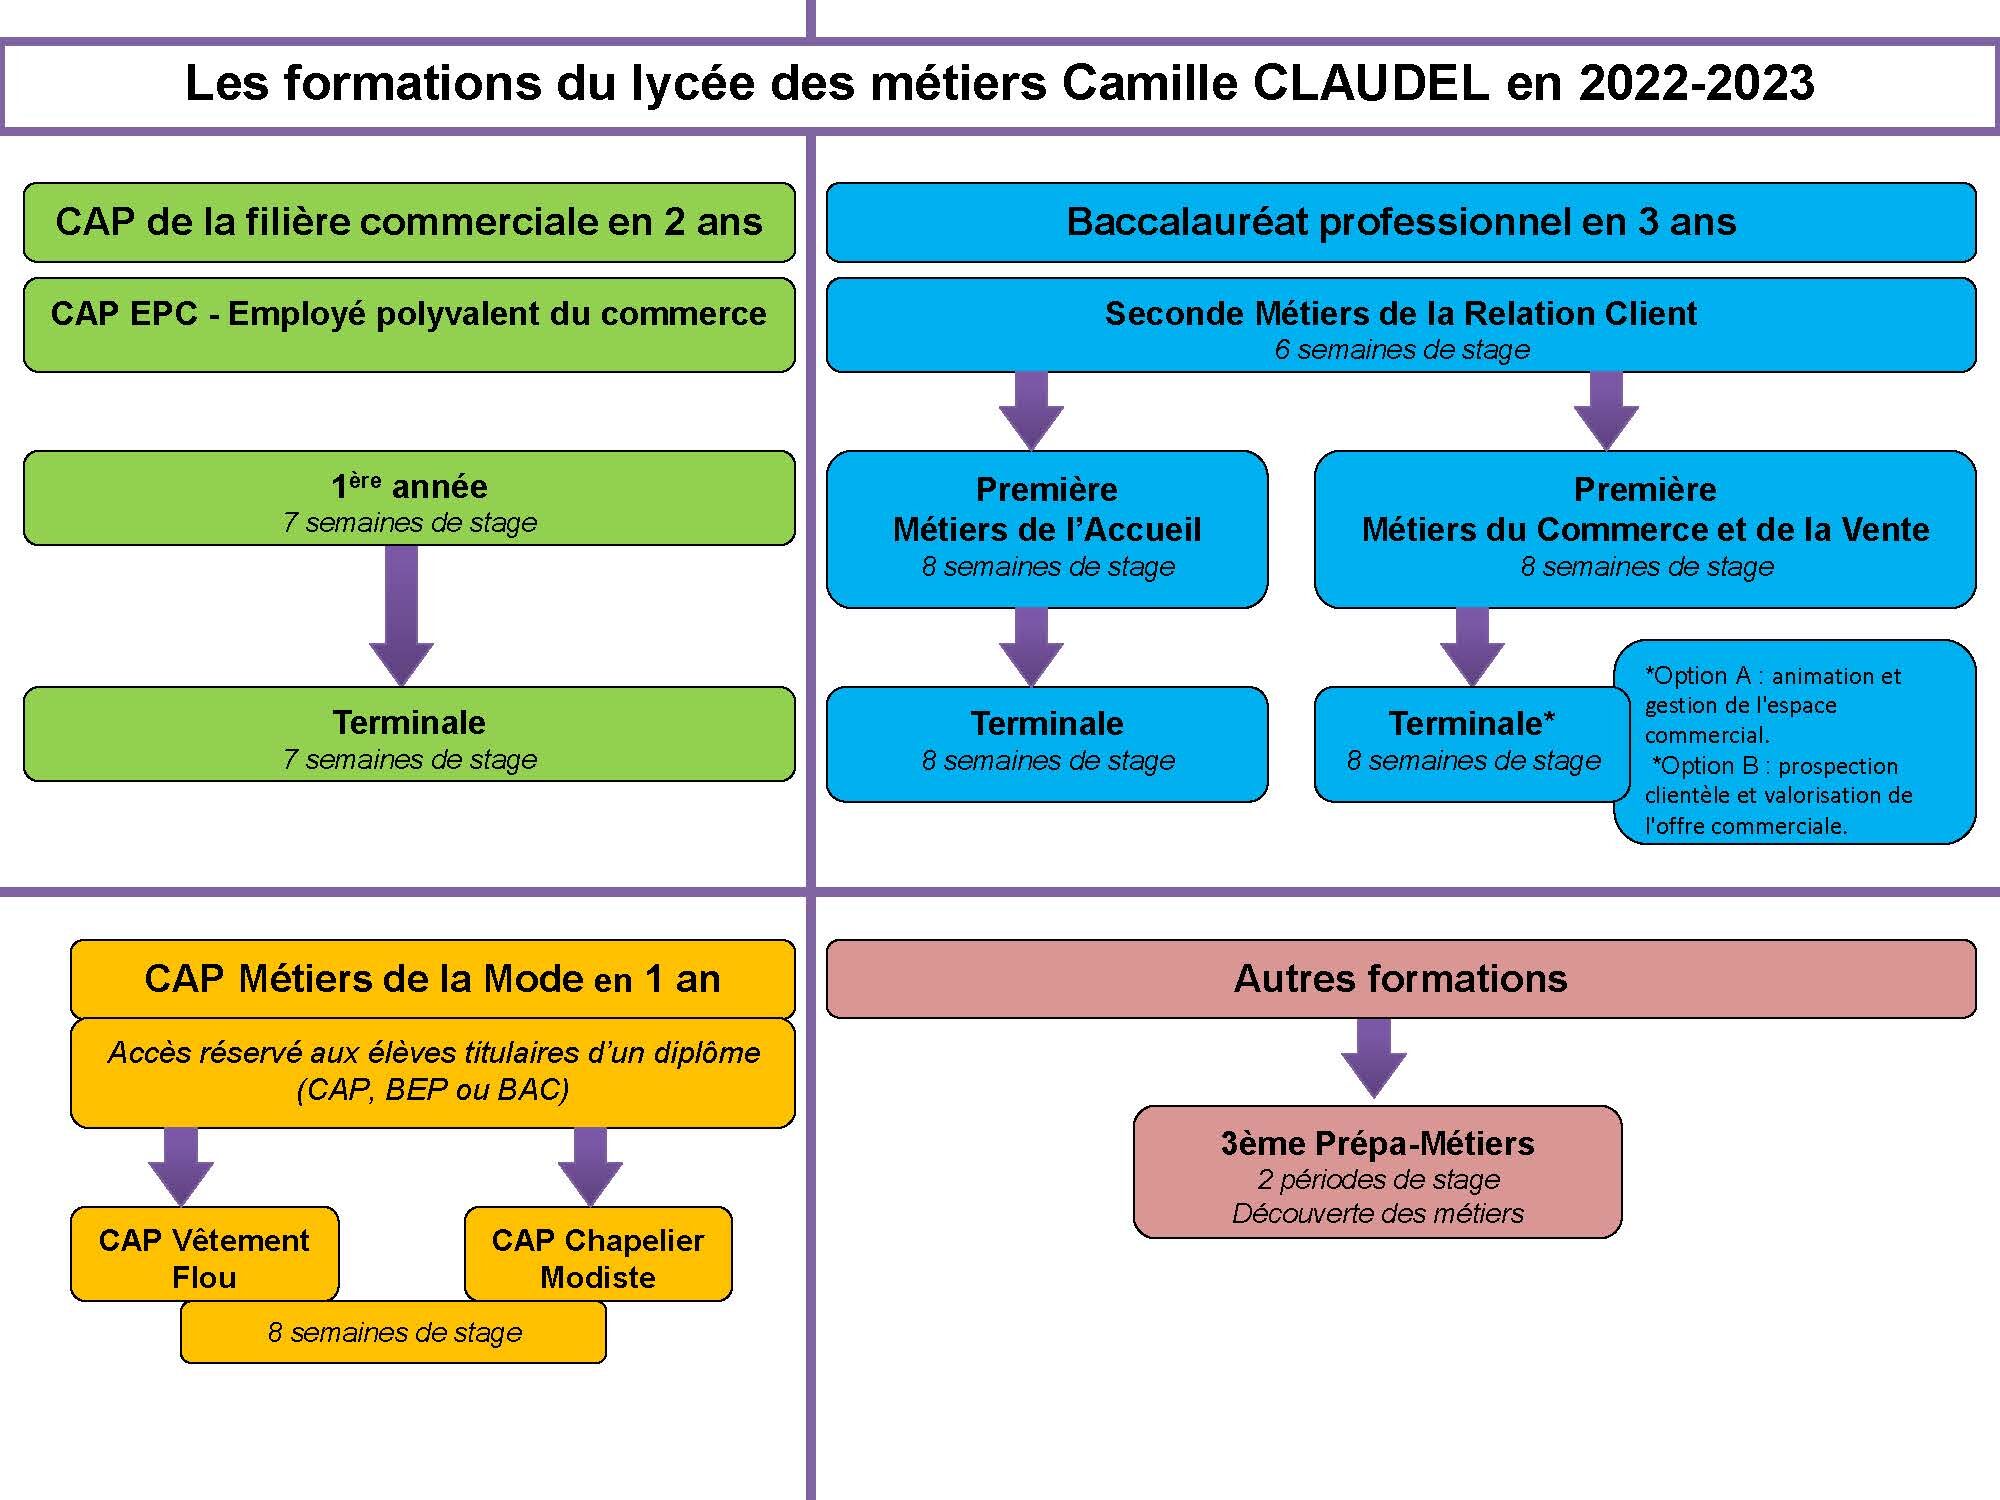 schéma de formation CClaudel 2022-2023.jpg